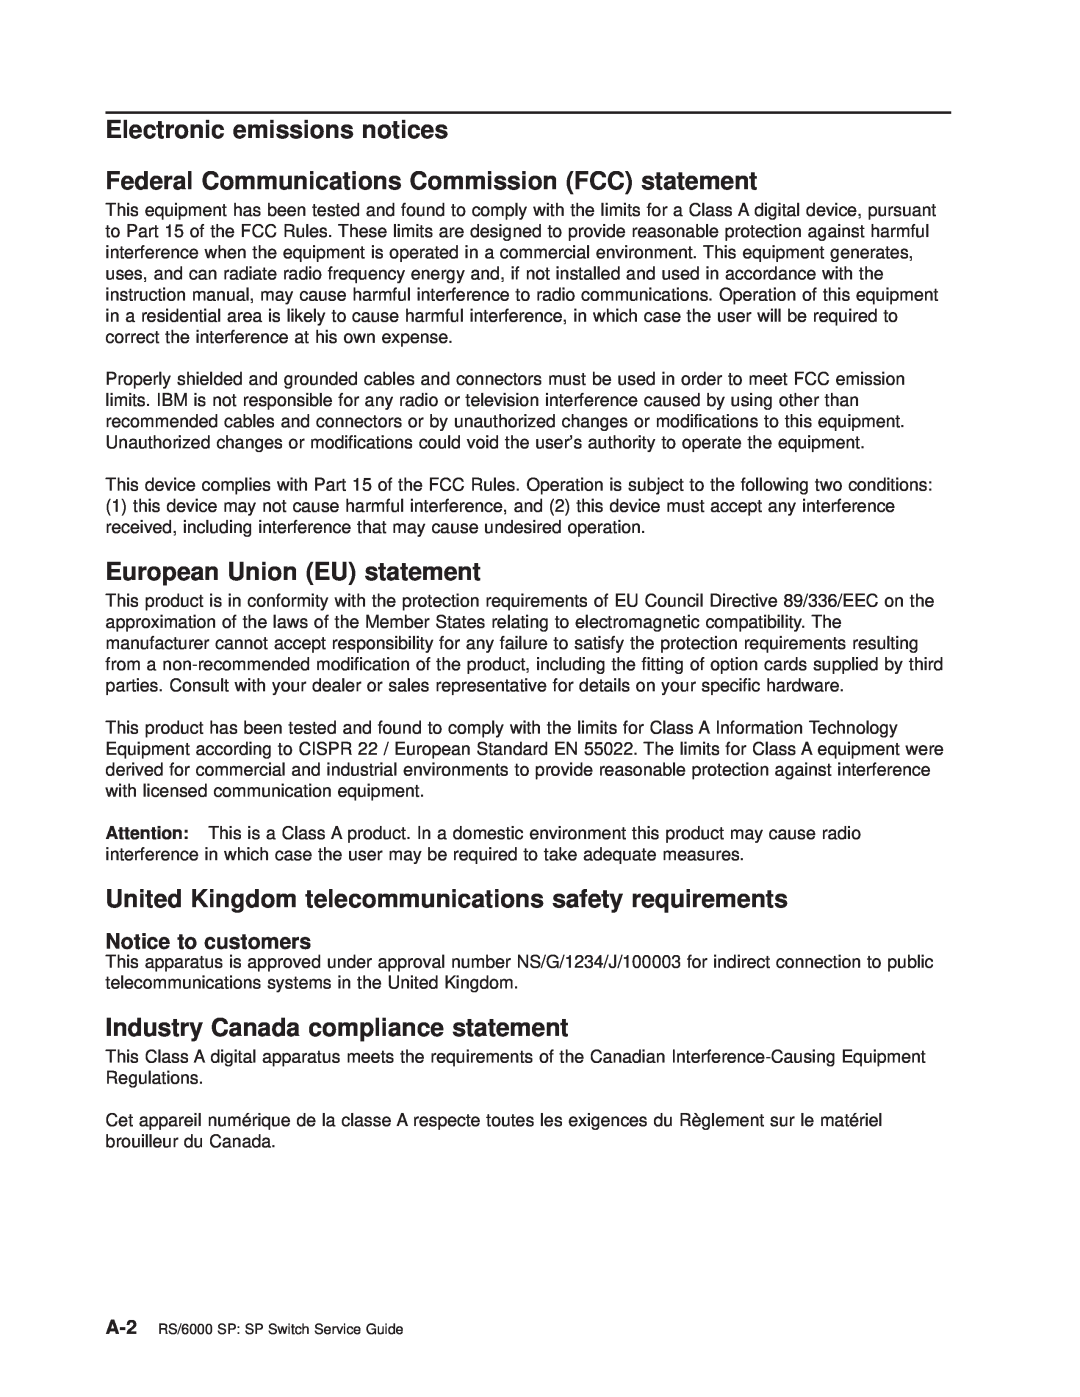 IBM RS/6000 SP Electronic emissions notices, Federal Communications Commission FCC statement, European Union EU statement 